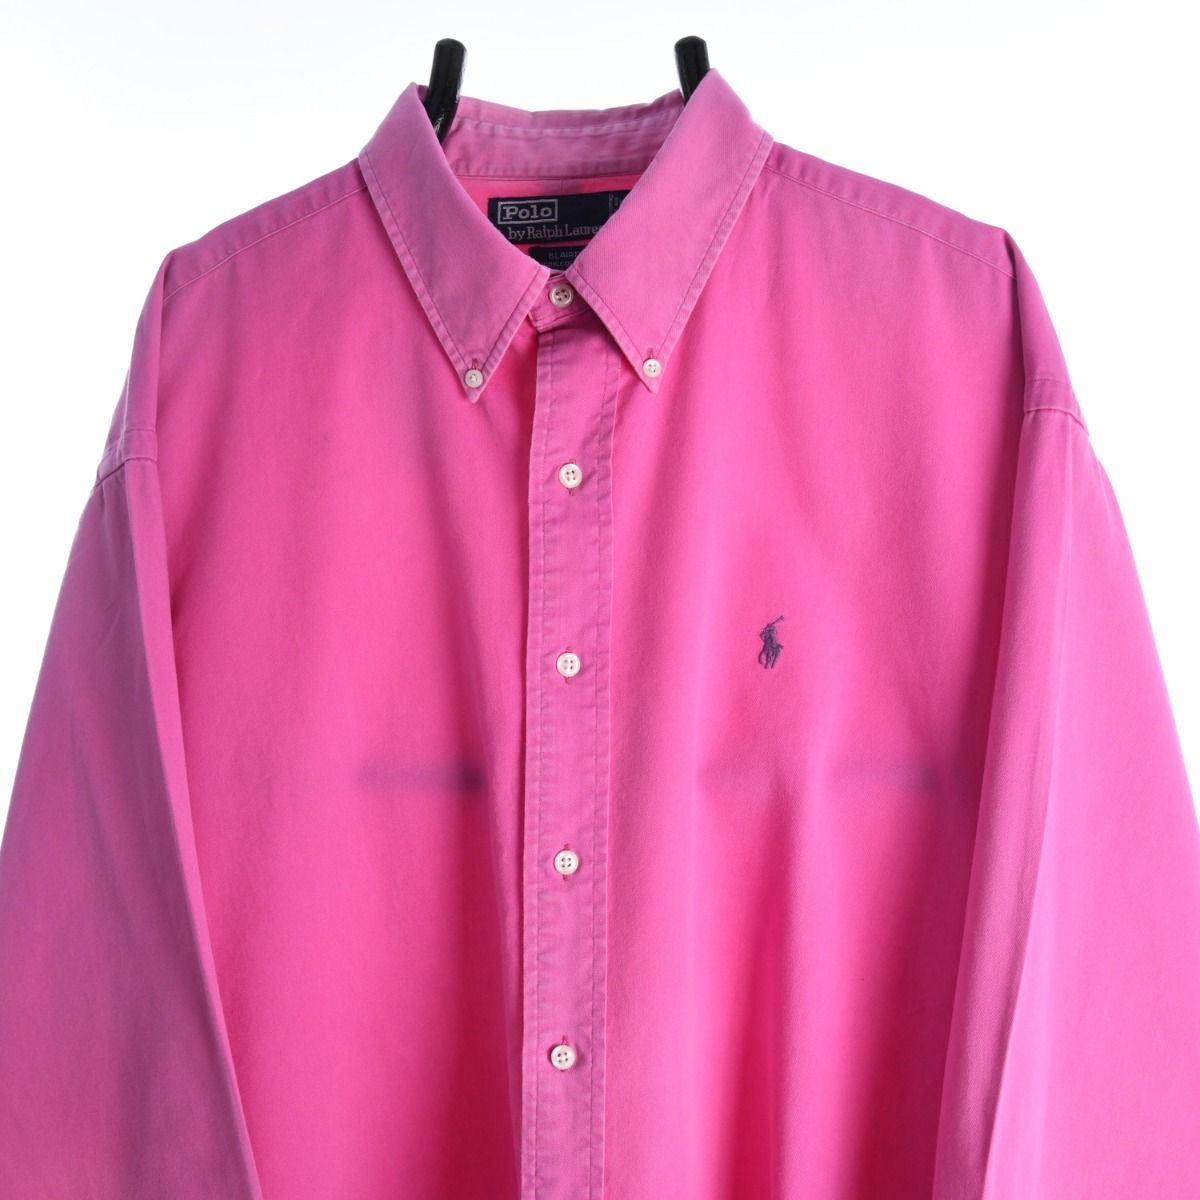 Ralph Lauren Blake Shirt in Lush Candy Pink Colour